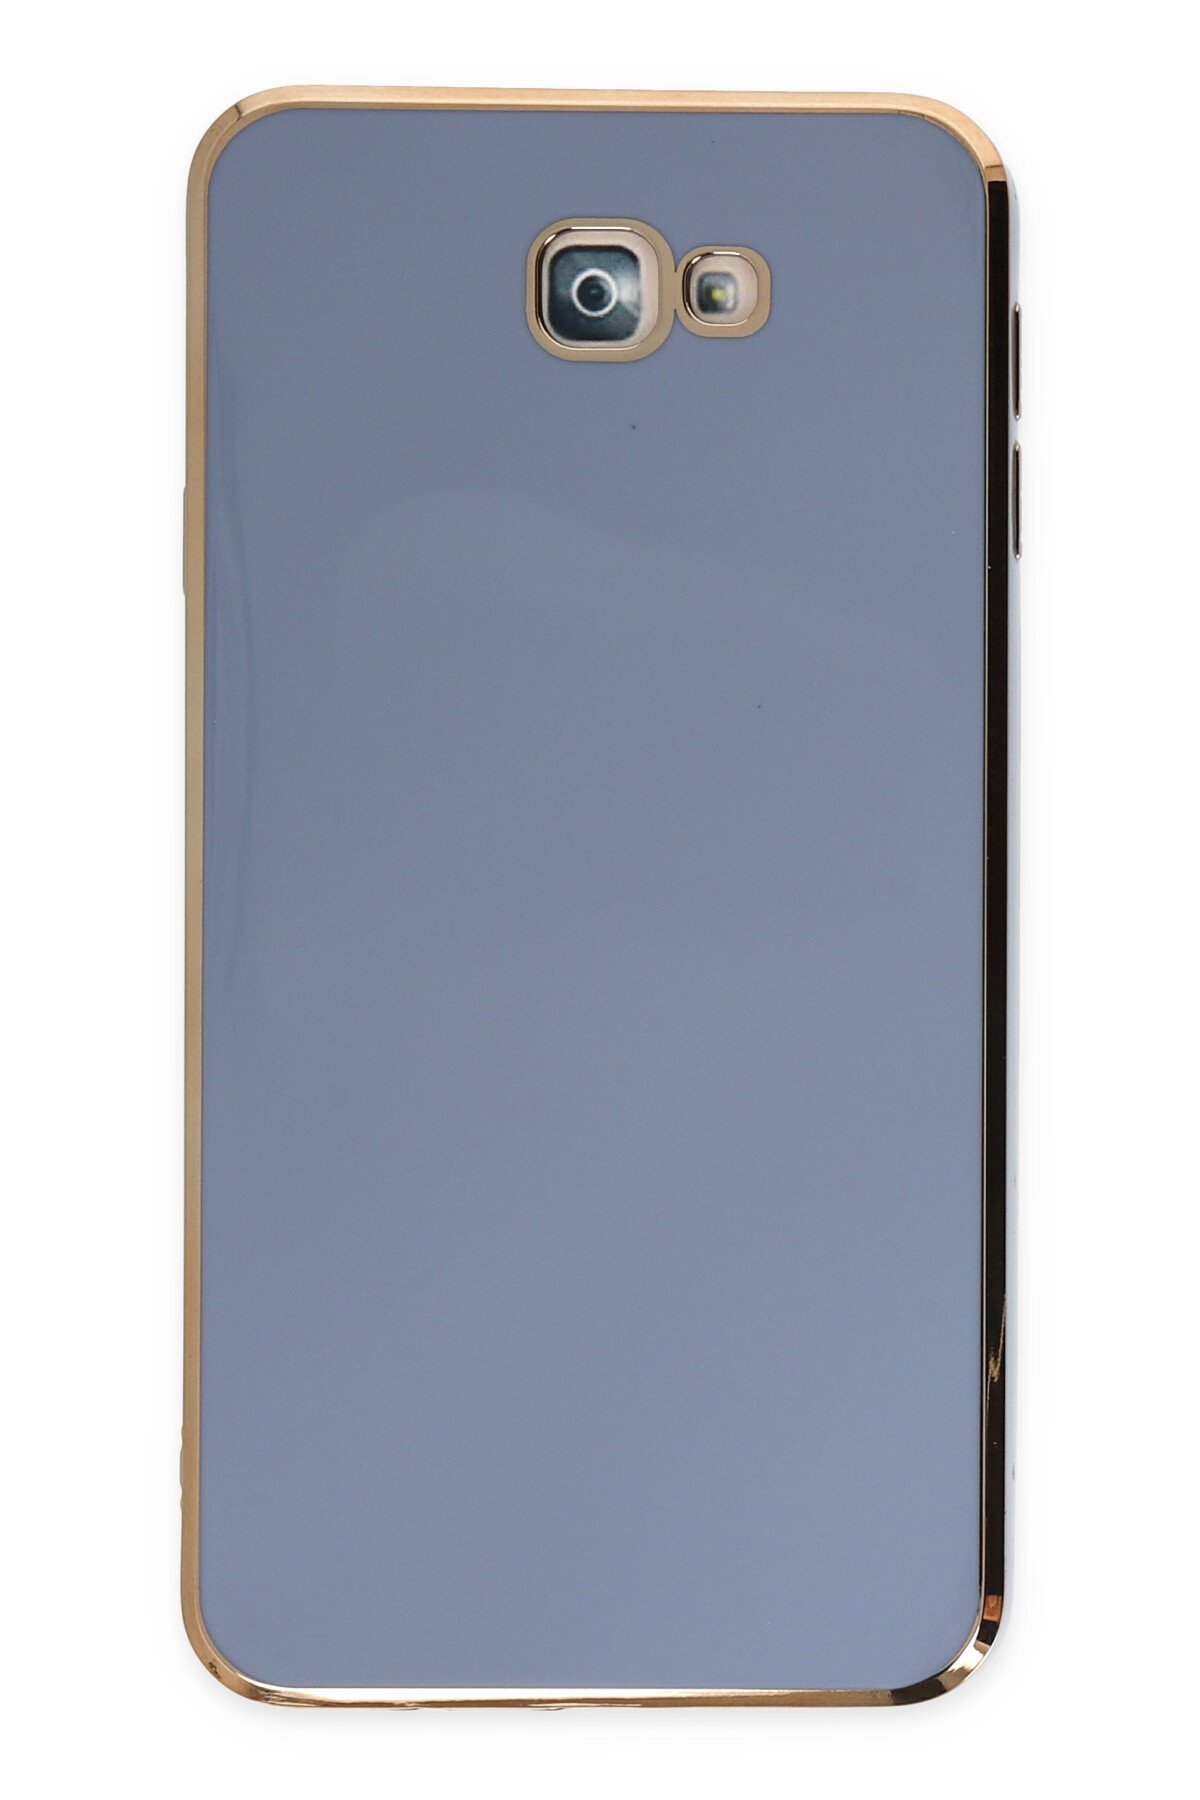 Newface Samsung Galaxy J7 Prime Kılıf Platin Silikon - Lila